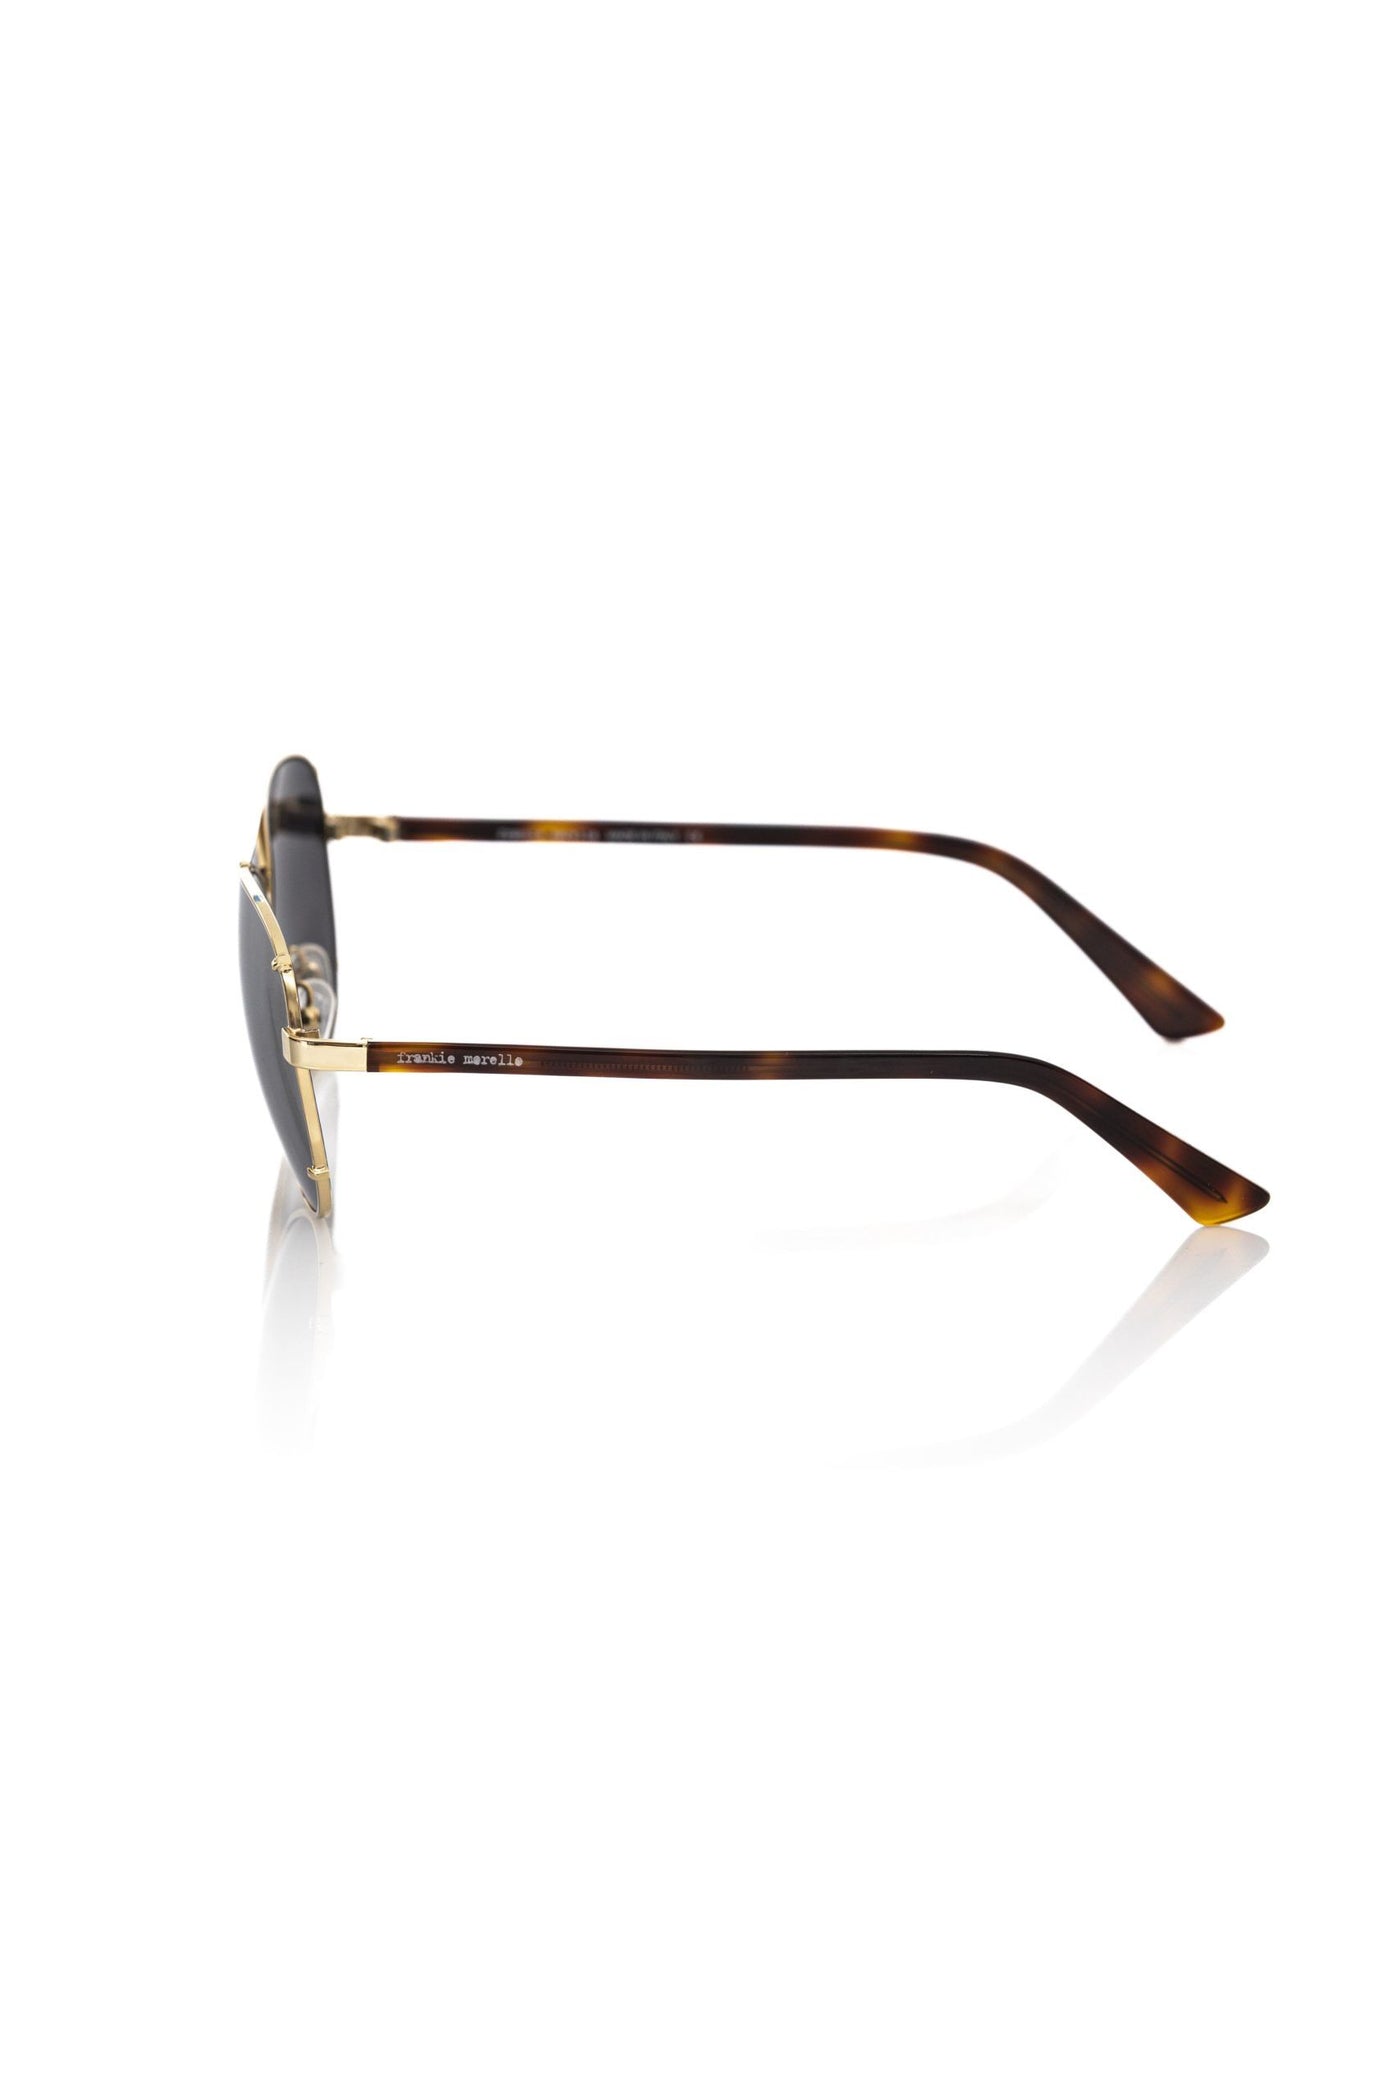 Frankie Morello Gold Metallic Fibre Sunglasses